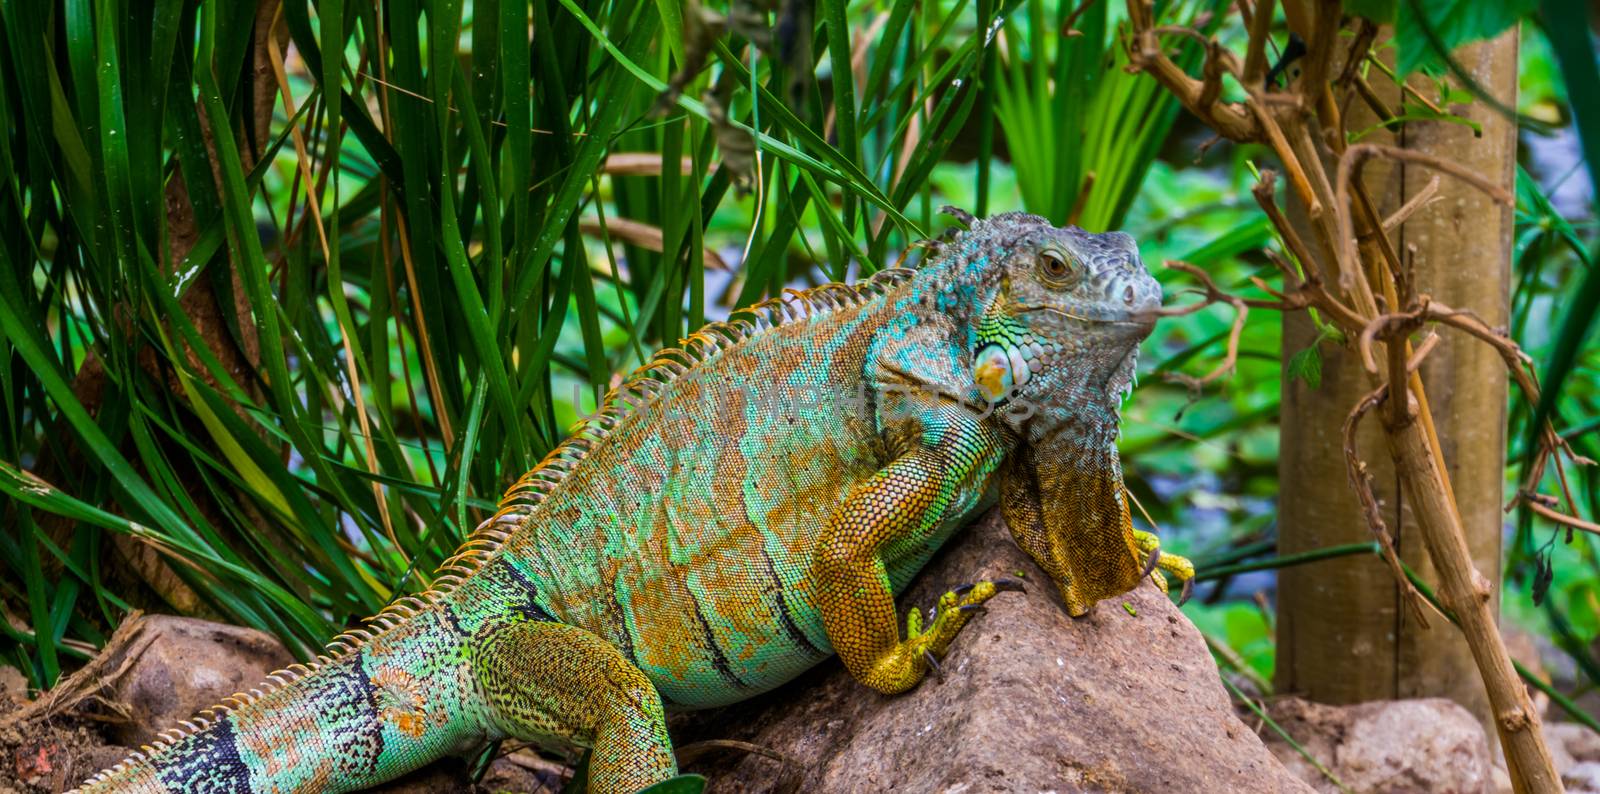 colorful iguana in closeup, tropical lizard from America, popular pet in herpetoculture by charlottebleijenberg